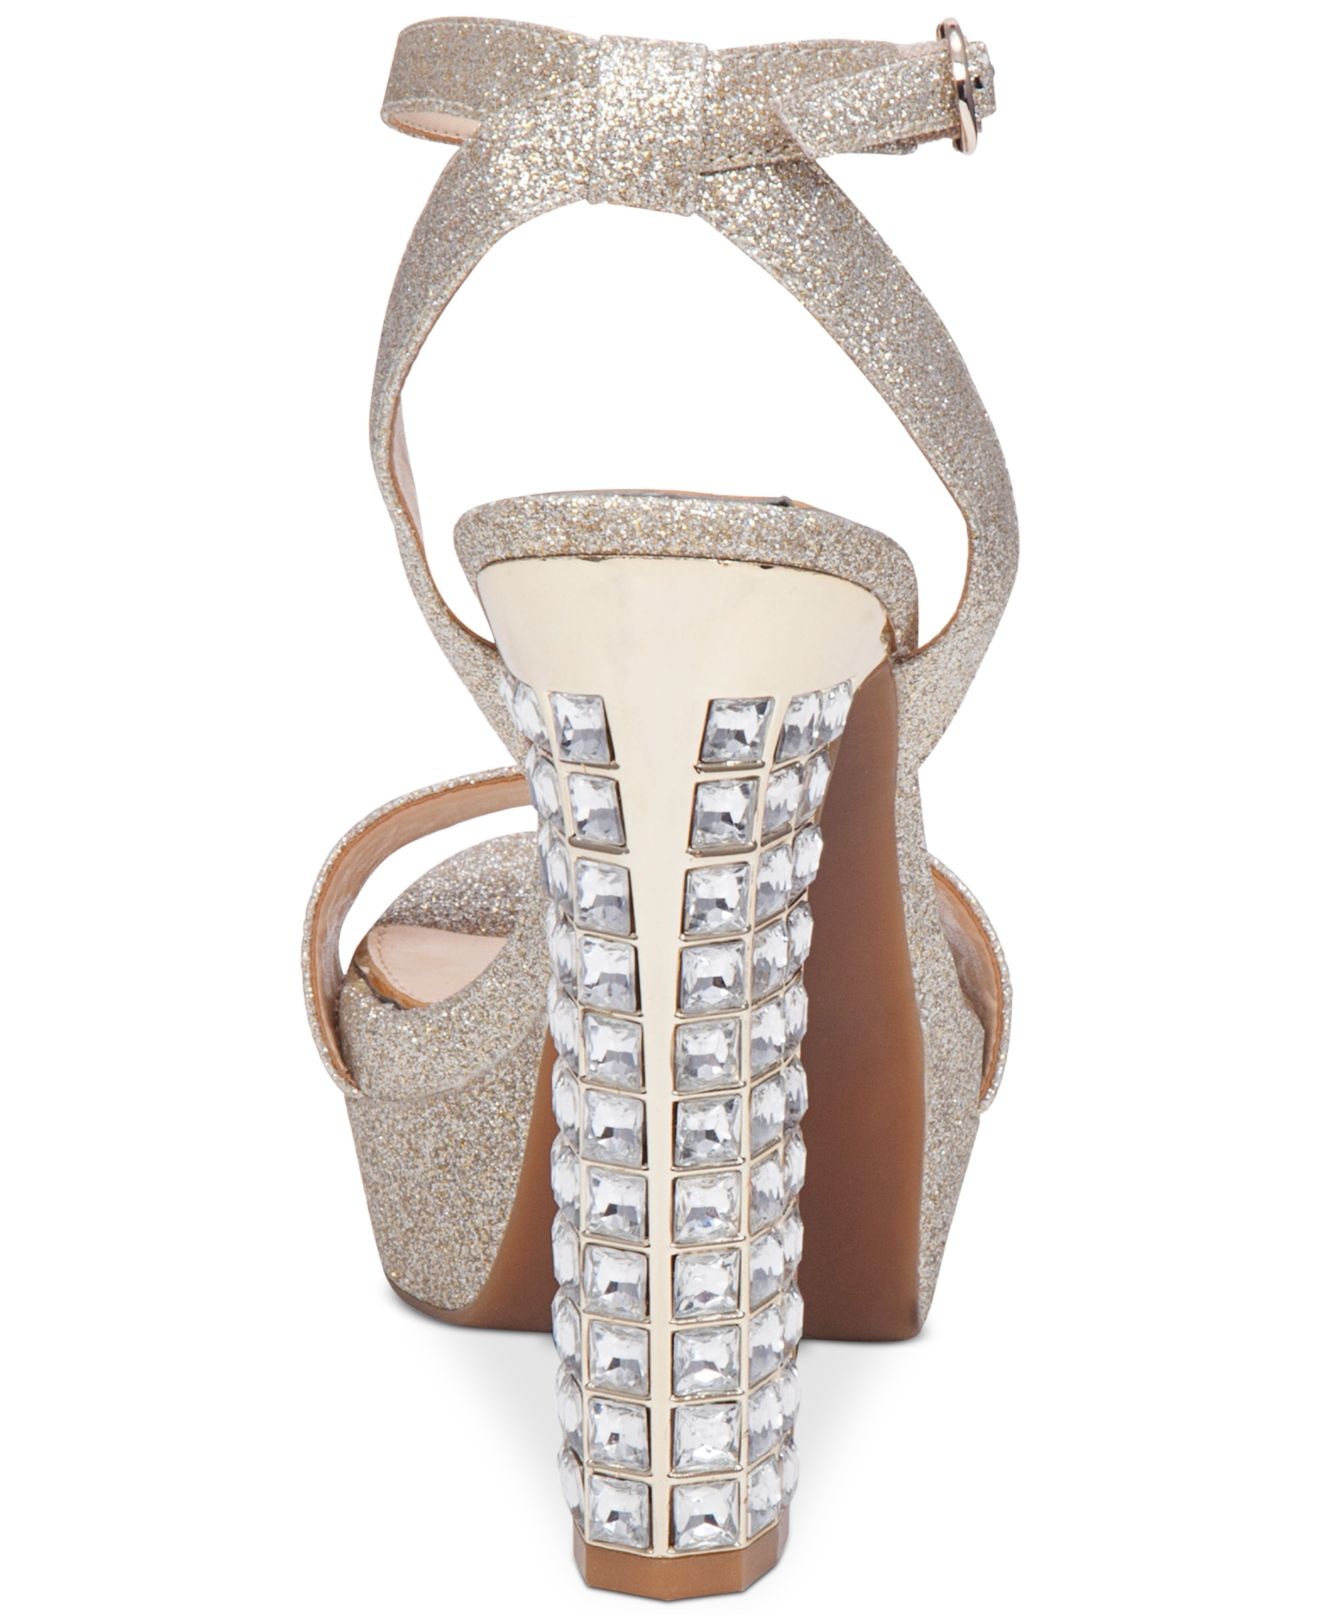 Lyst - Jessica Simpson Banda Embellished Platform Dress Sandals in Metallic